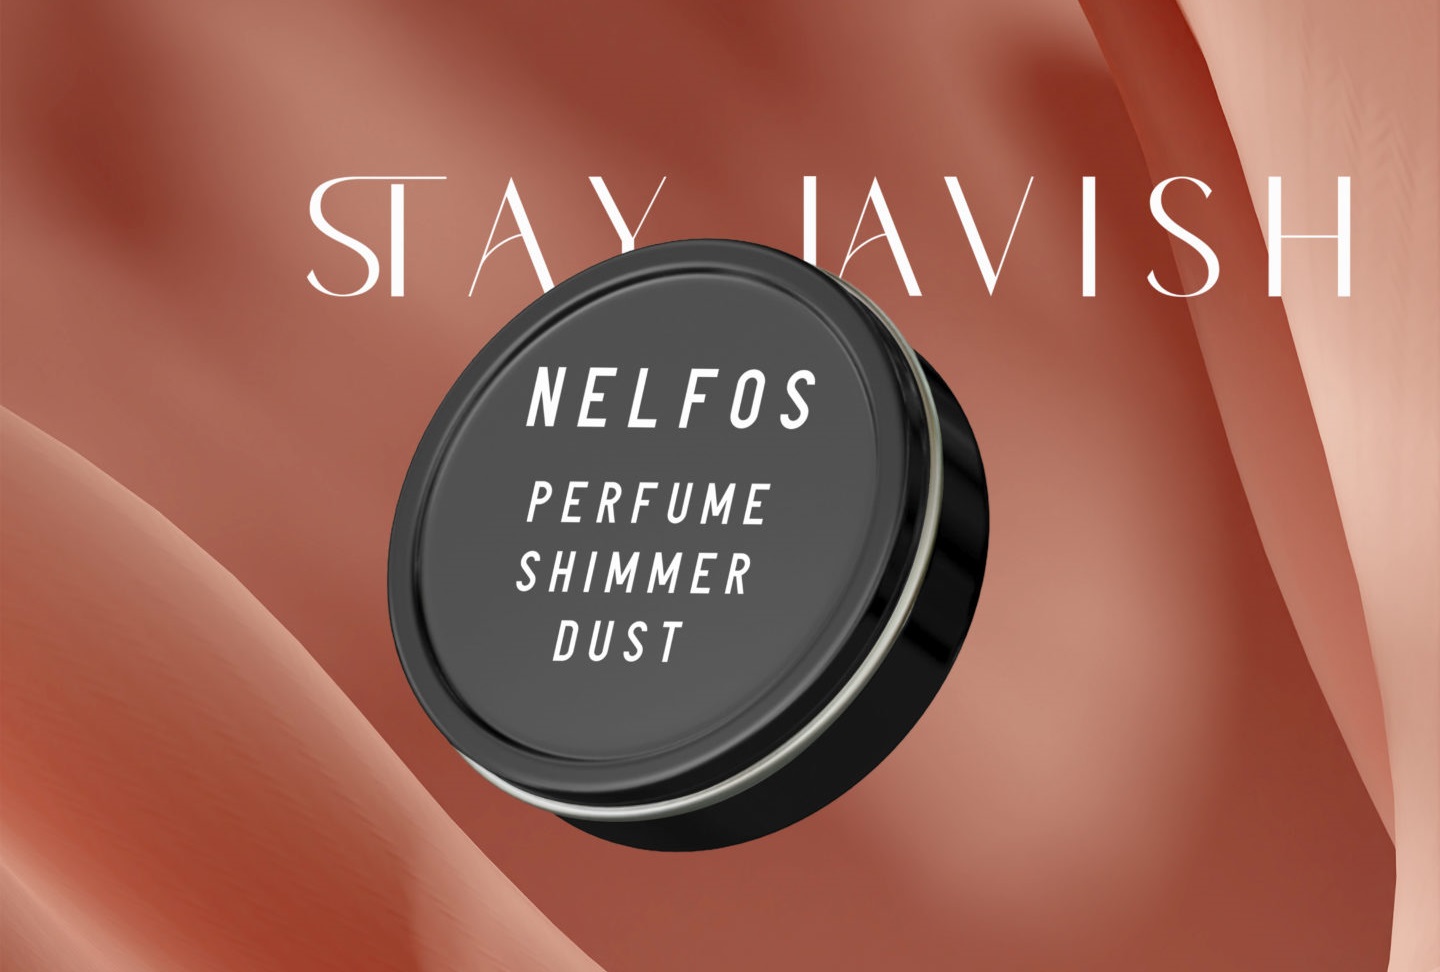 Summer Perfume Shimmer Dust by NELFOS Skincare